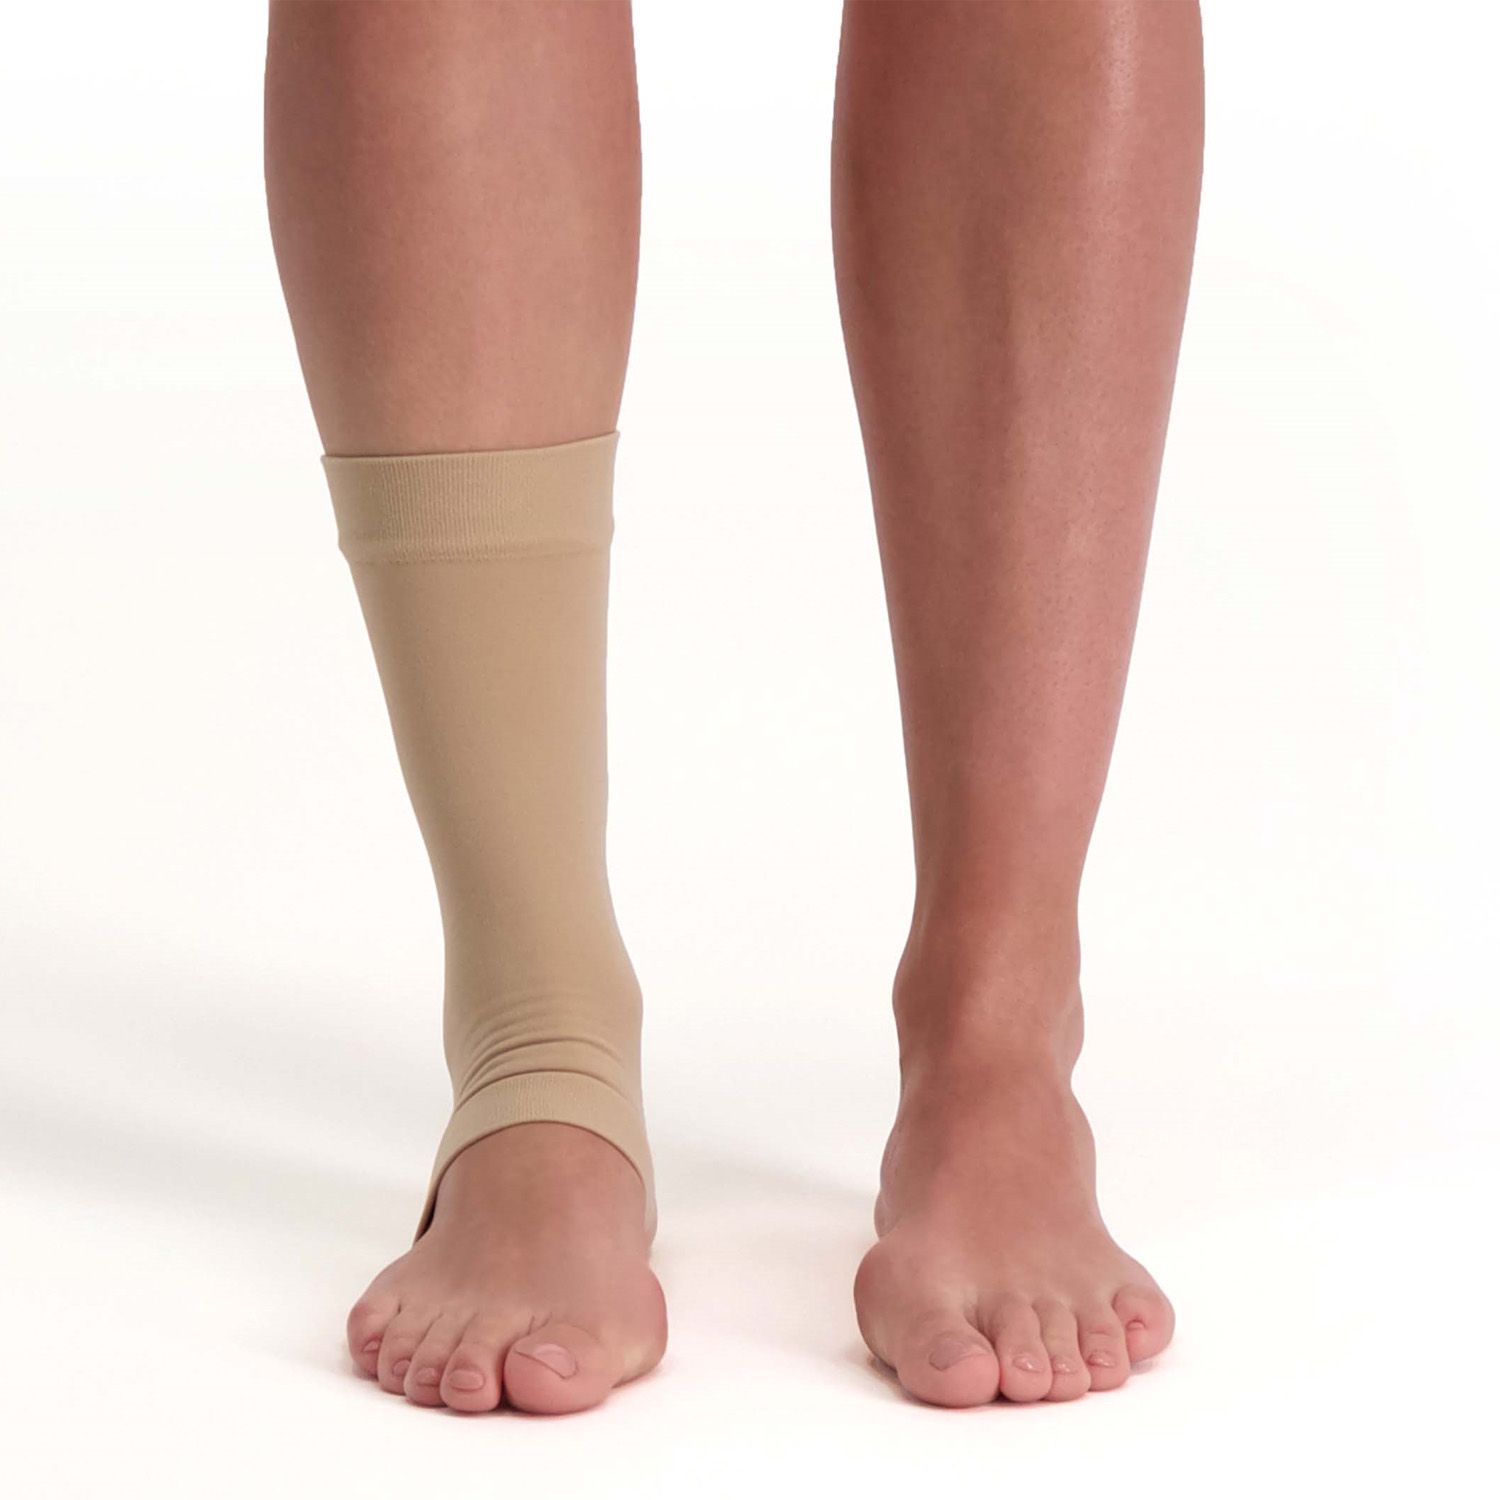 solelution achilles tendon gel sock in packaging